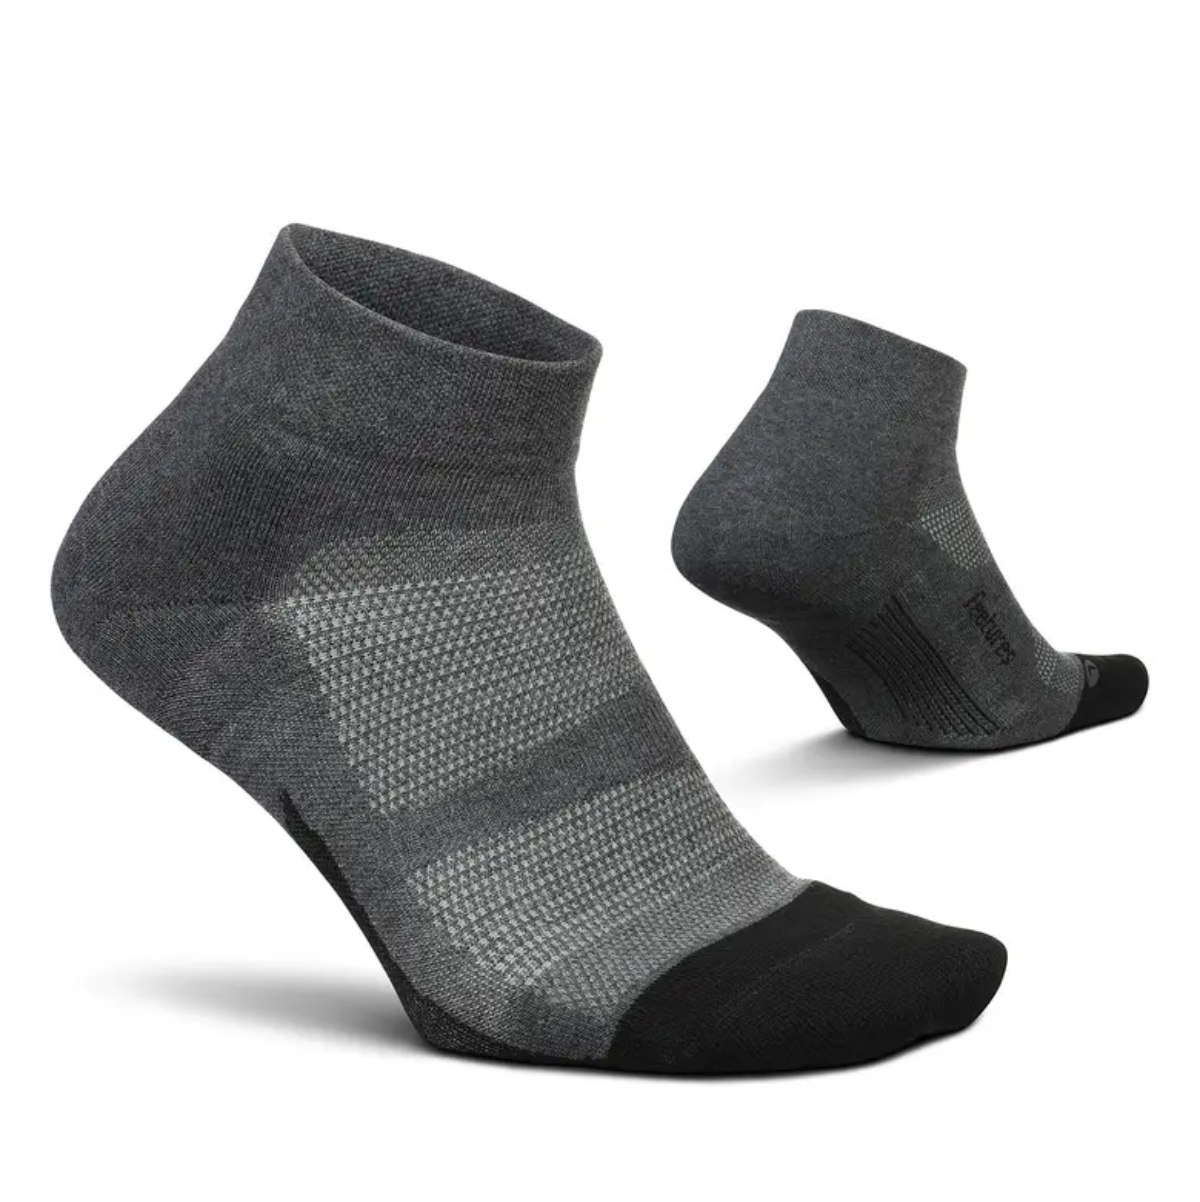 Sooverki Protective Sport Cushion Elite Athletic Socks-Comfortable Cotton Plantar Fasciitis Support 